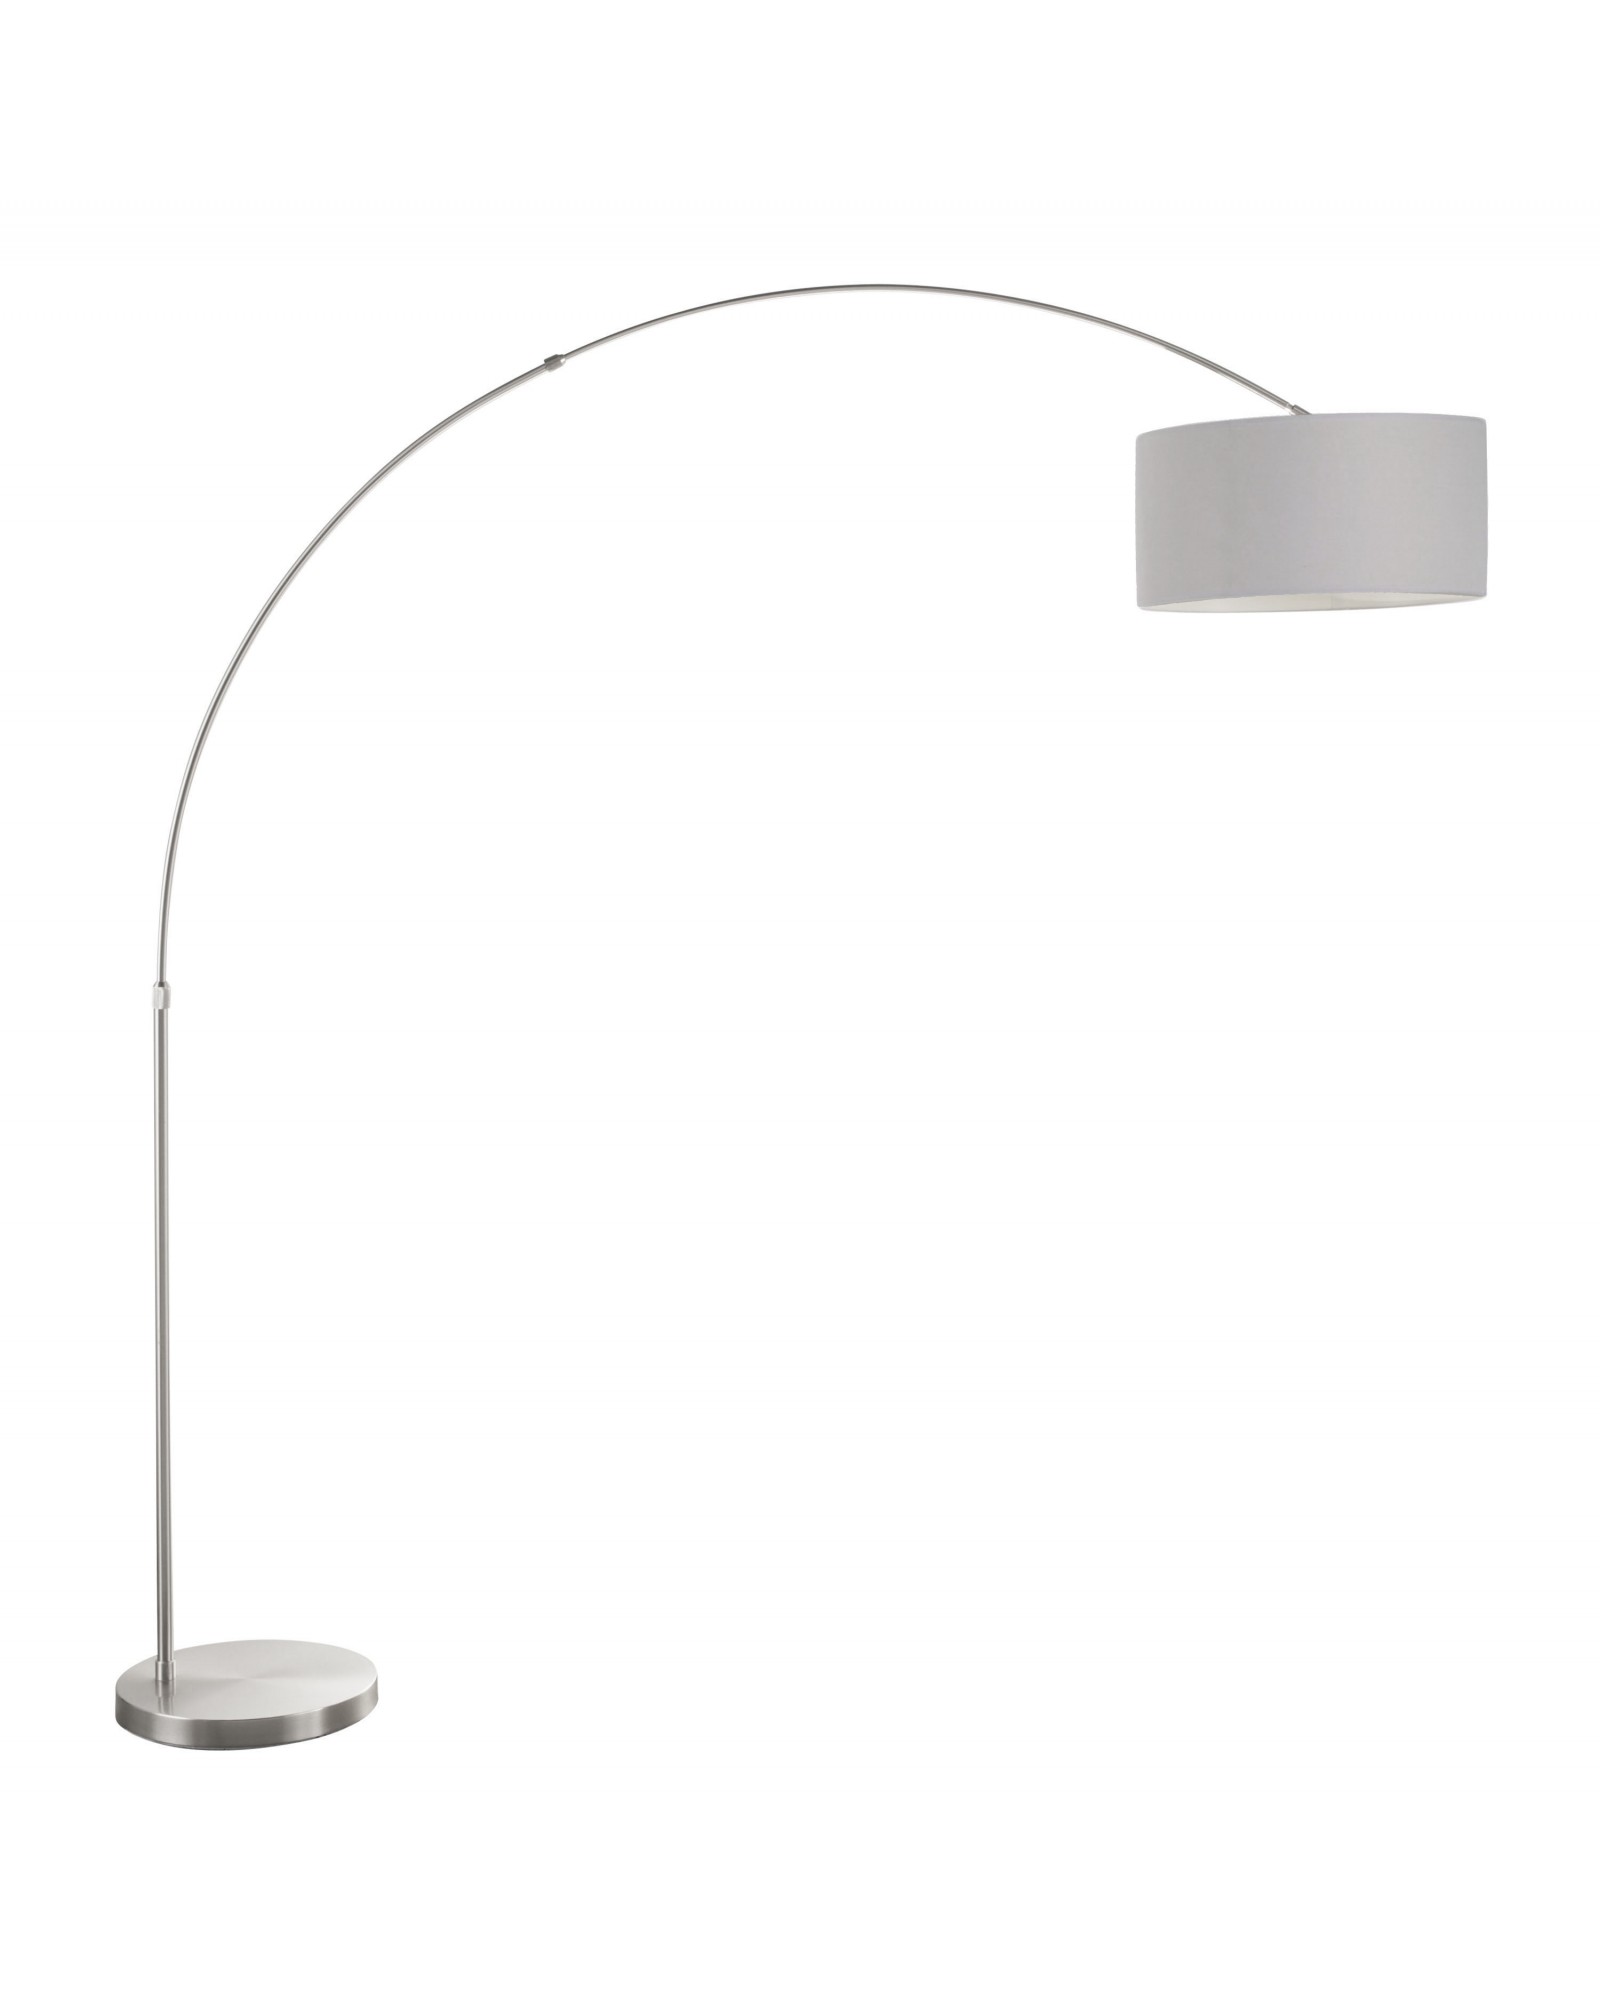 Salon Contemporary Floor Lamp with Satin Nickel Base and Grey Shade